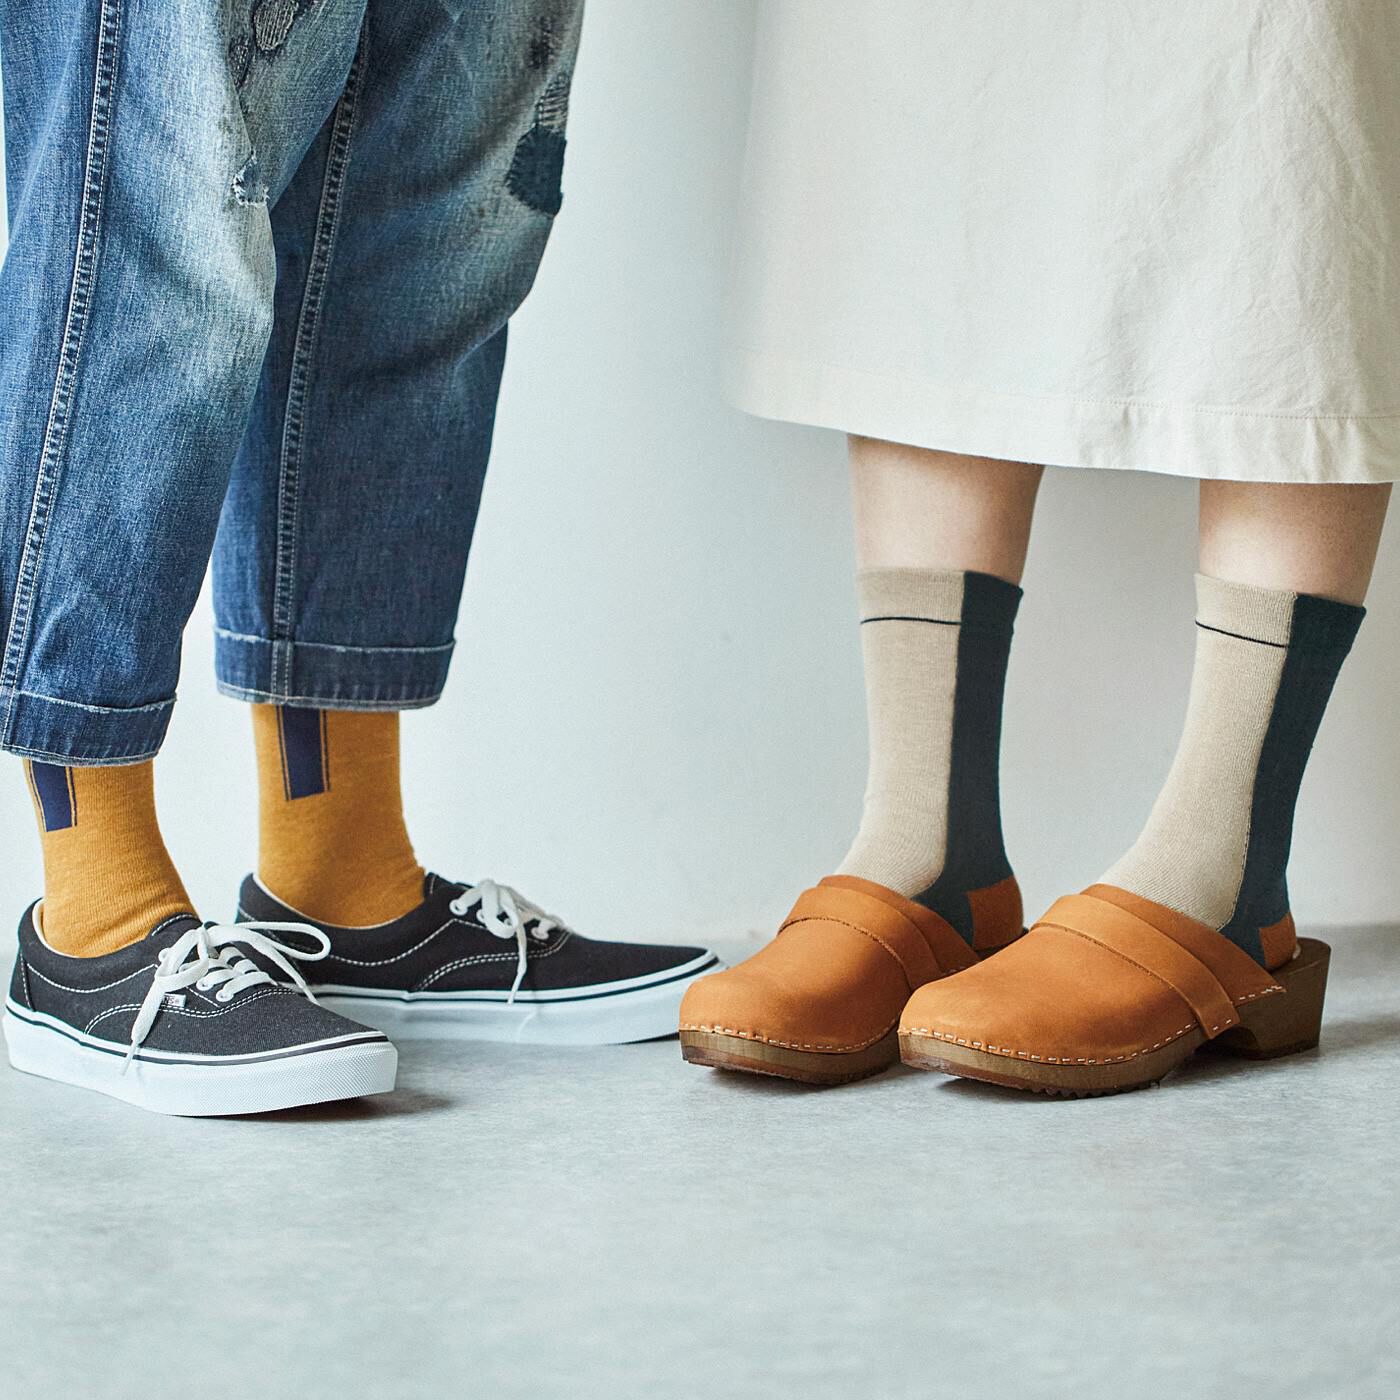 USEDo|レトロカラーで足もとに差し色　抗菌防臭ユニセックス靴下の会|家族で楽しめる、ボーダーレスなデザイン。